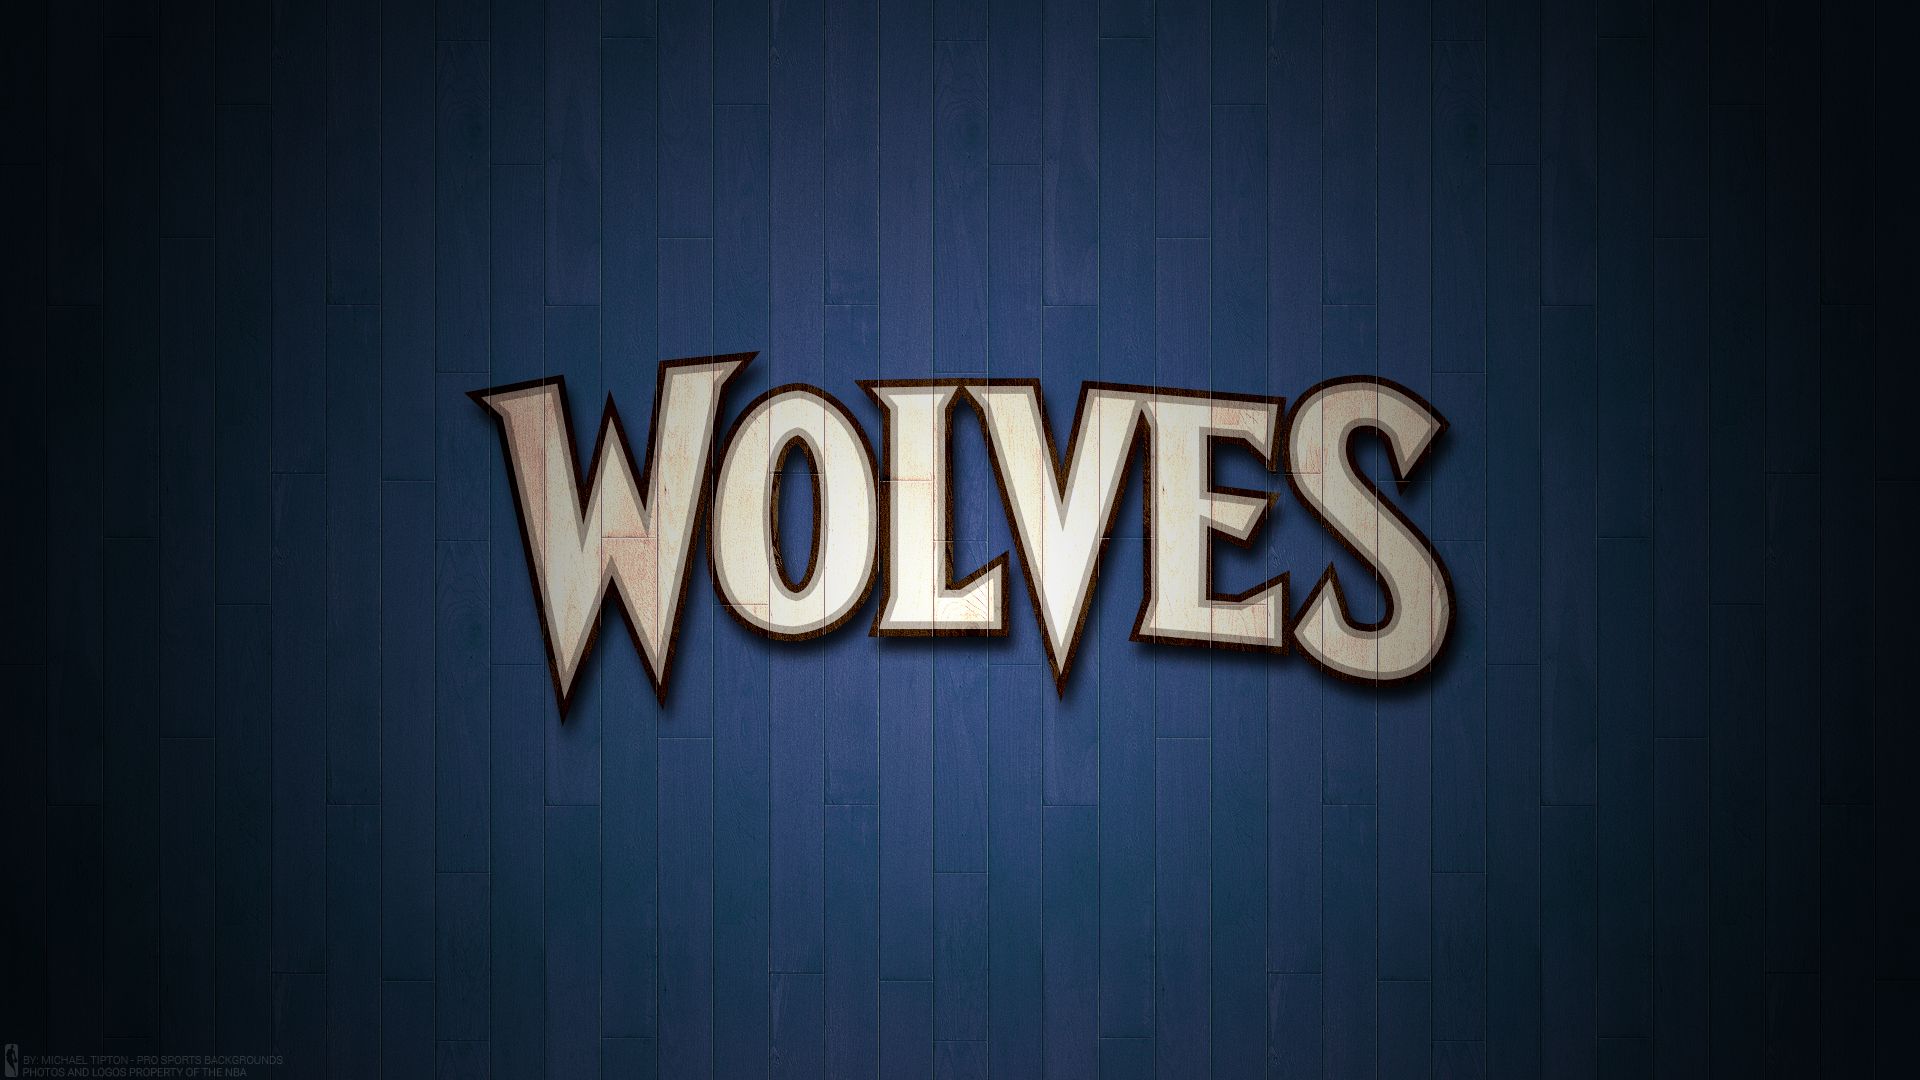 Download Minnesota Timberwolves Logo In Black Wallpaper